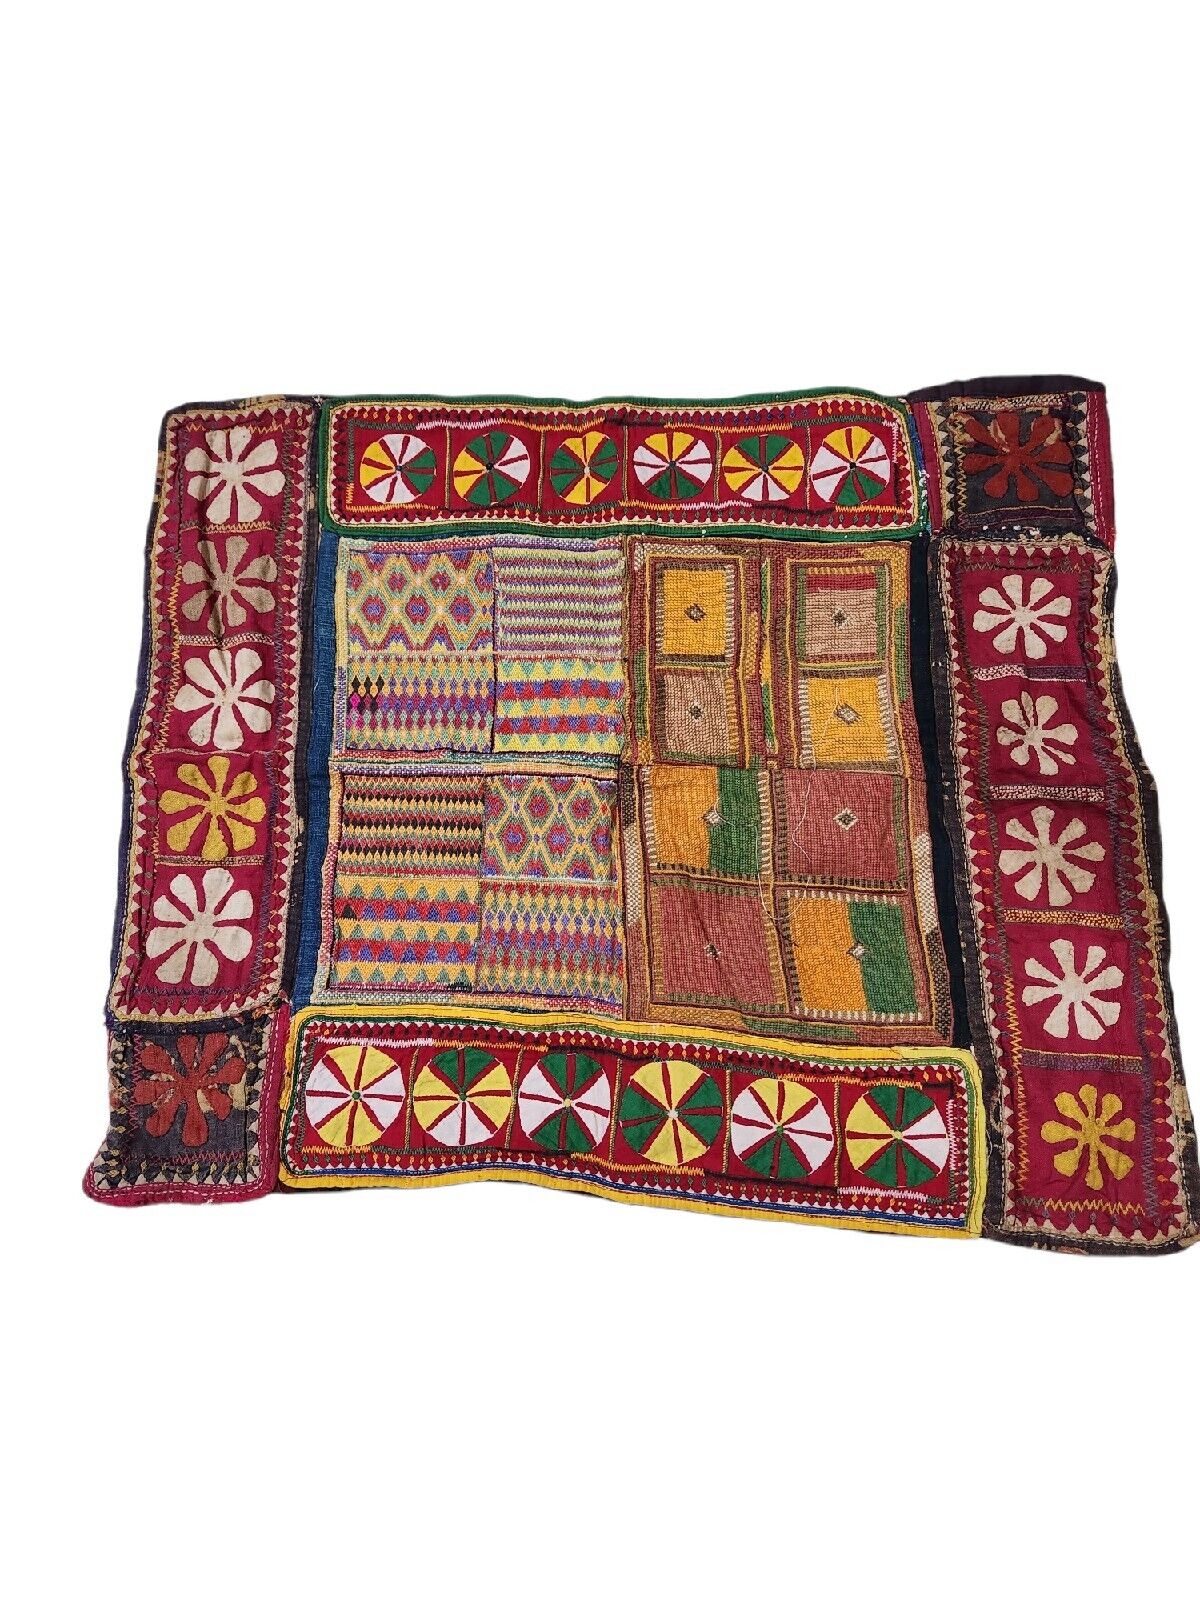 Antique Indian Textile Banjara Hindu Lambada Embroidery Tapestry